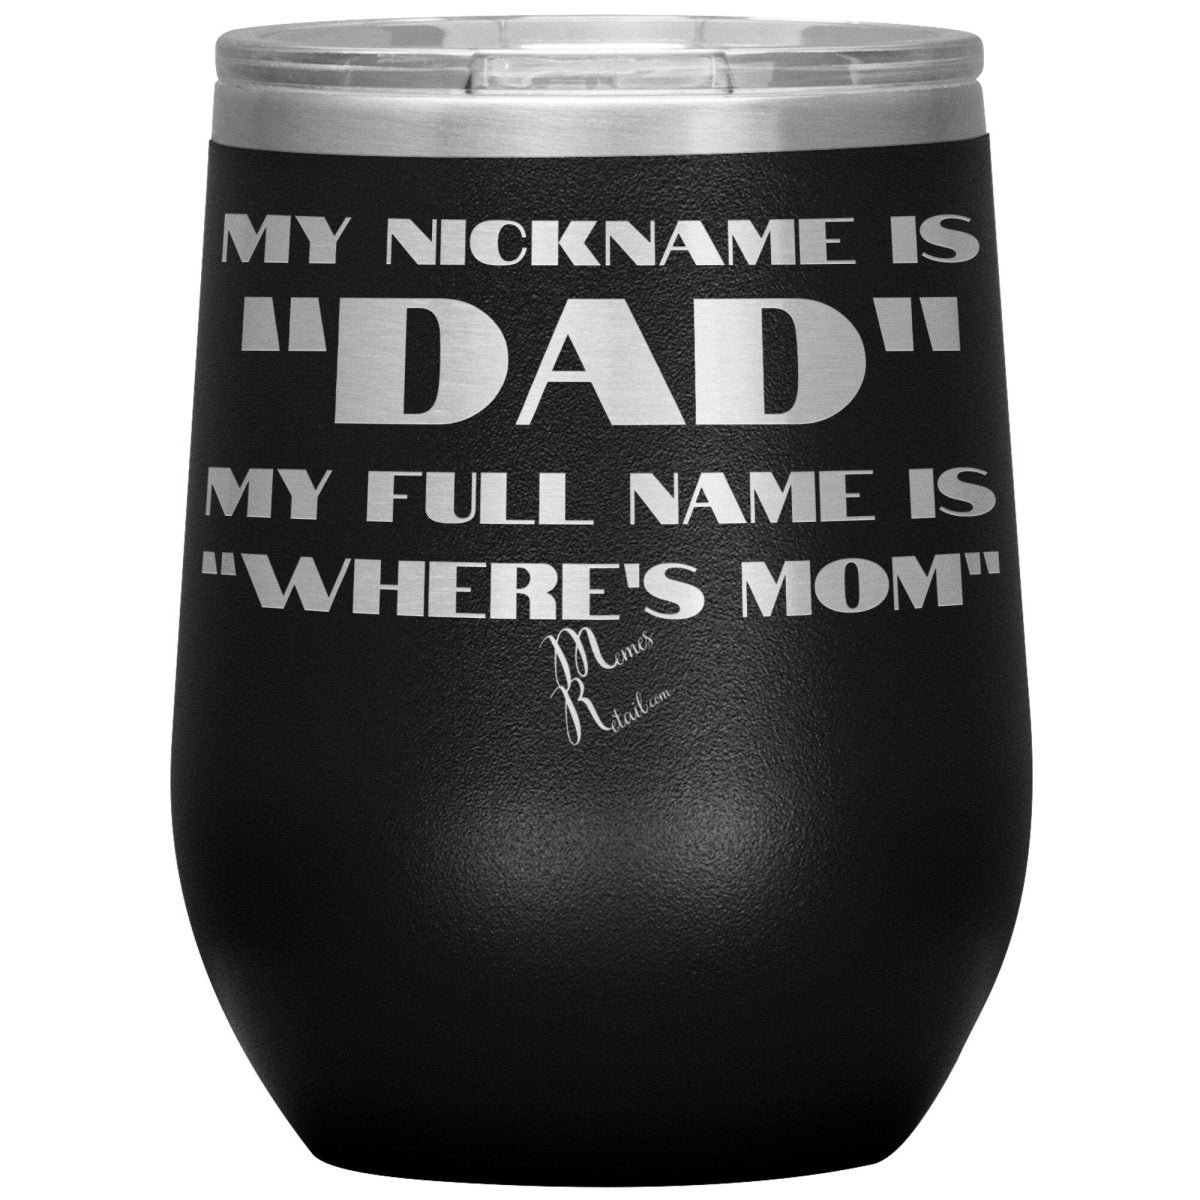 My Nickname is "Dad", My Full Name is "Where's Mom" Tumblers, 12oz Wine Insulated Tumbler / Black - MemesRetail.com